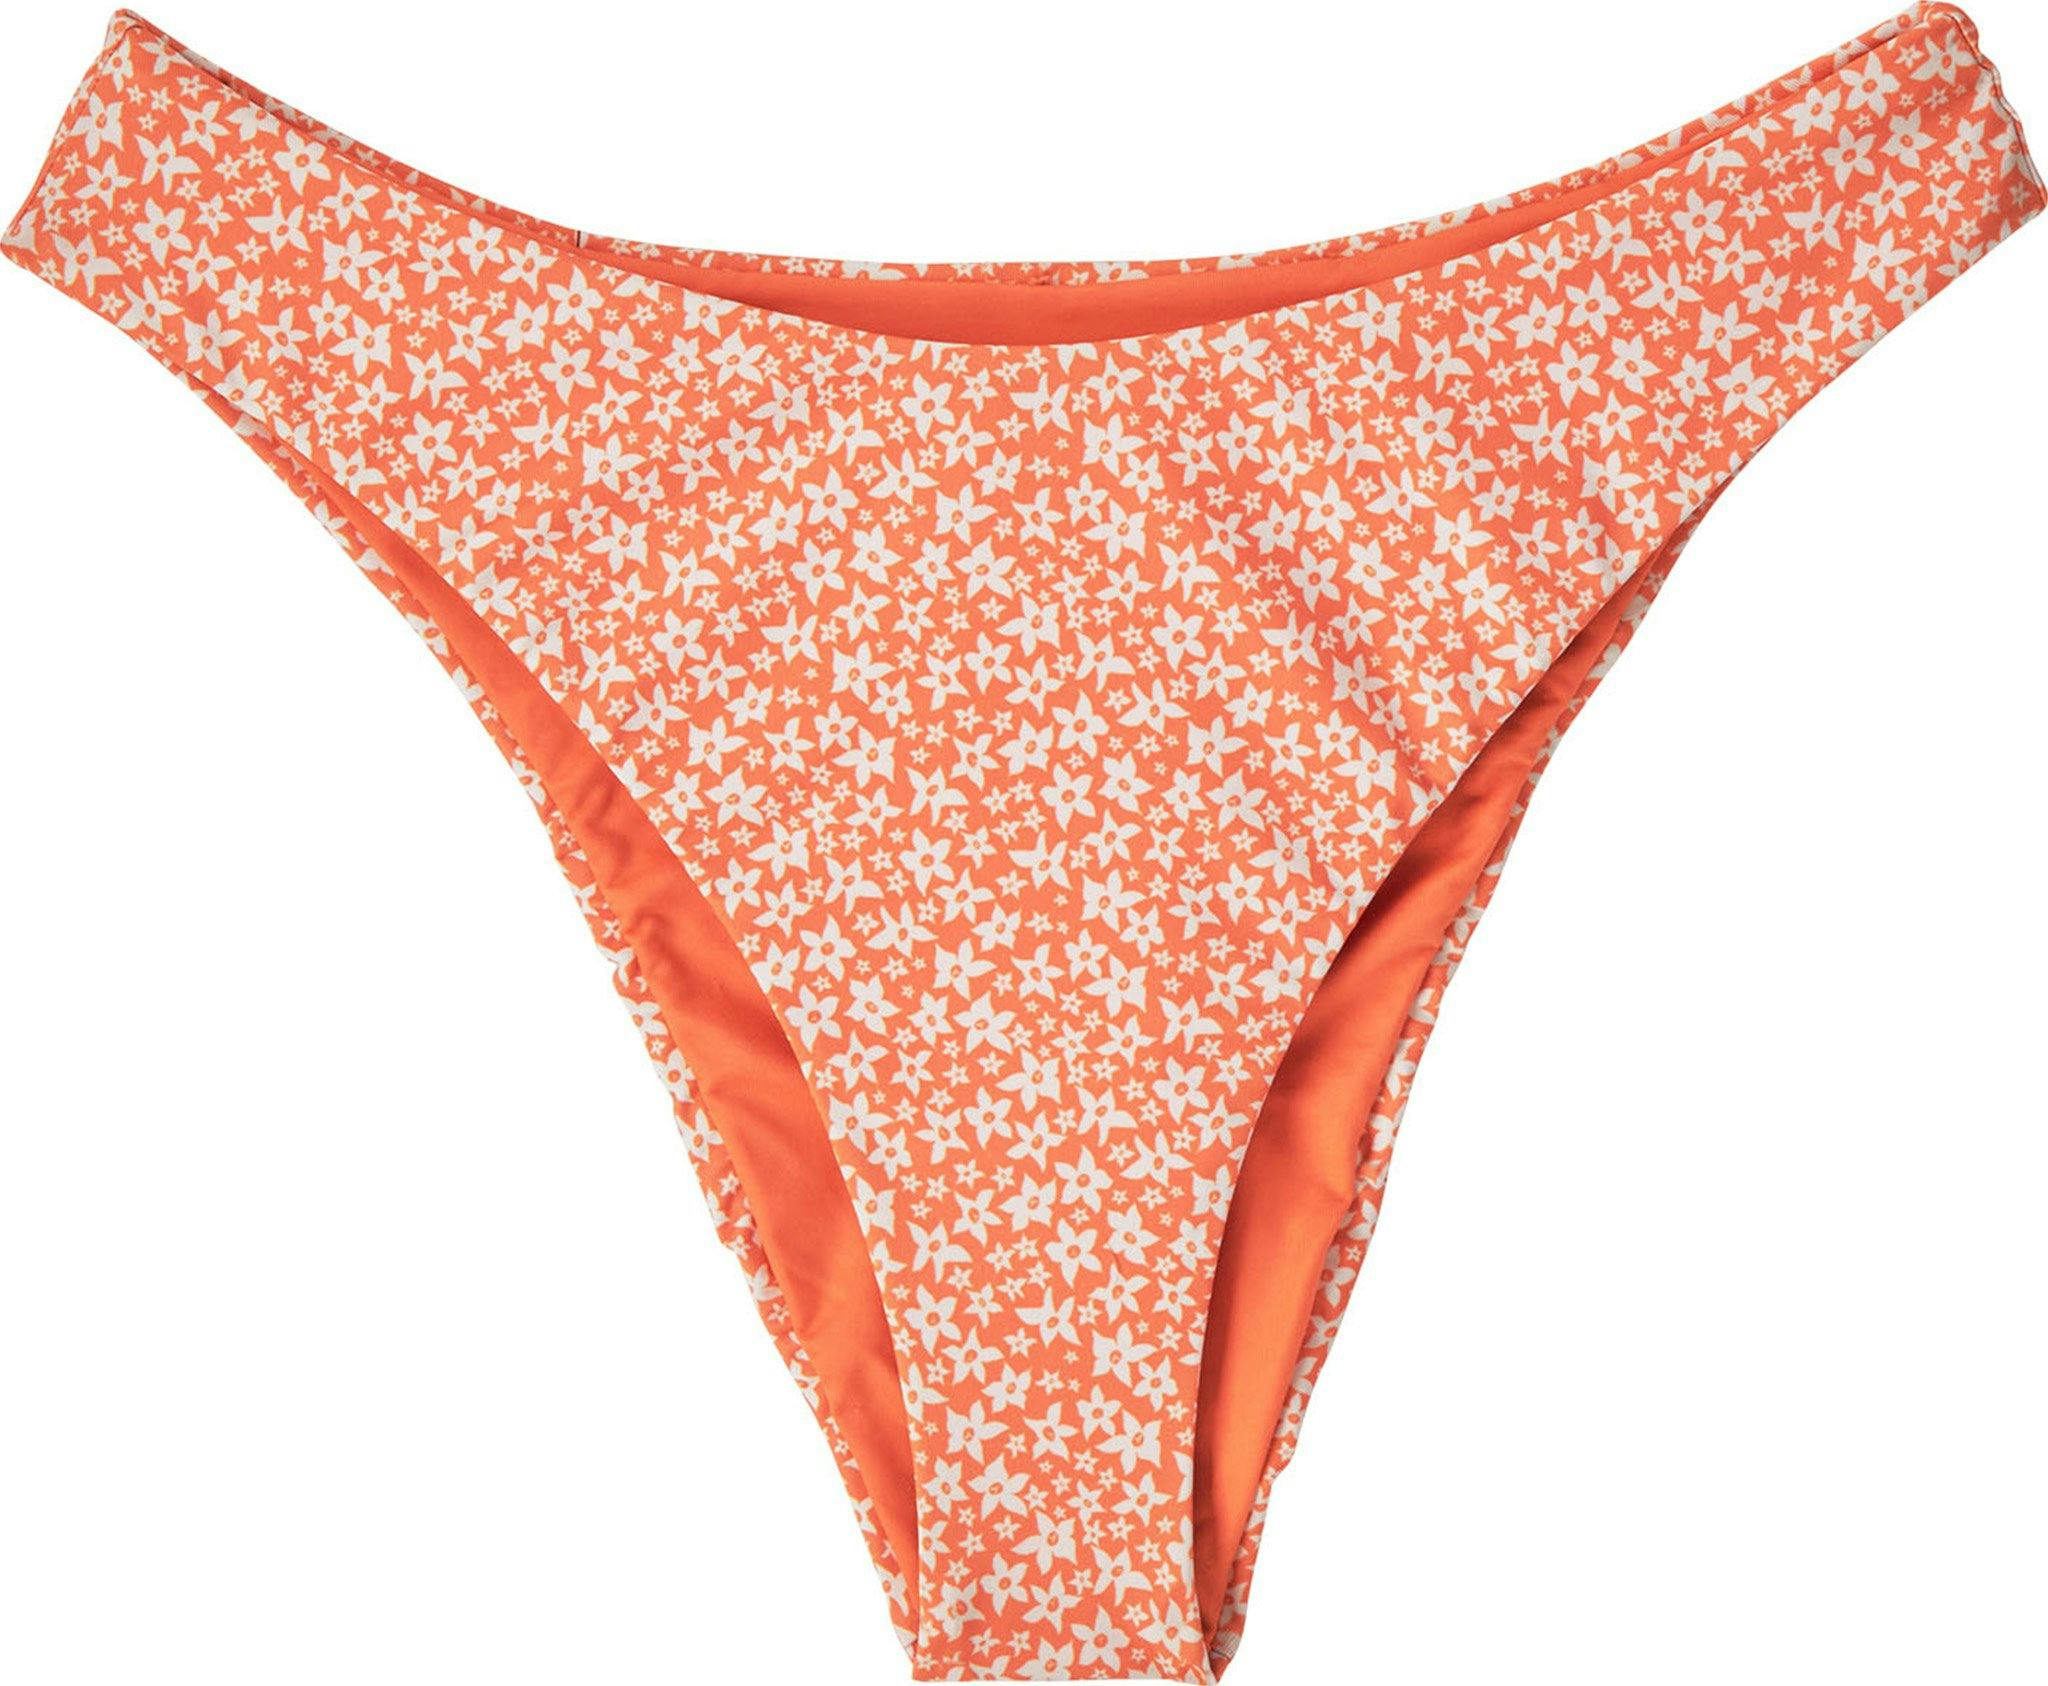 Product image for Upswell Bikini Bottoms - Women's